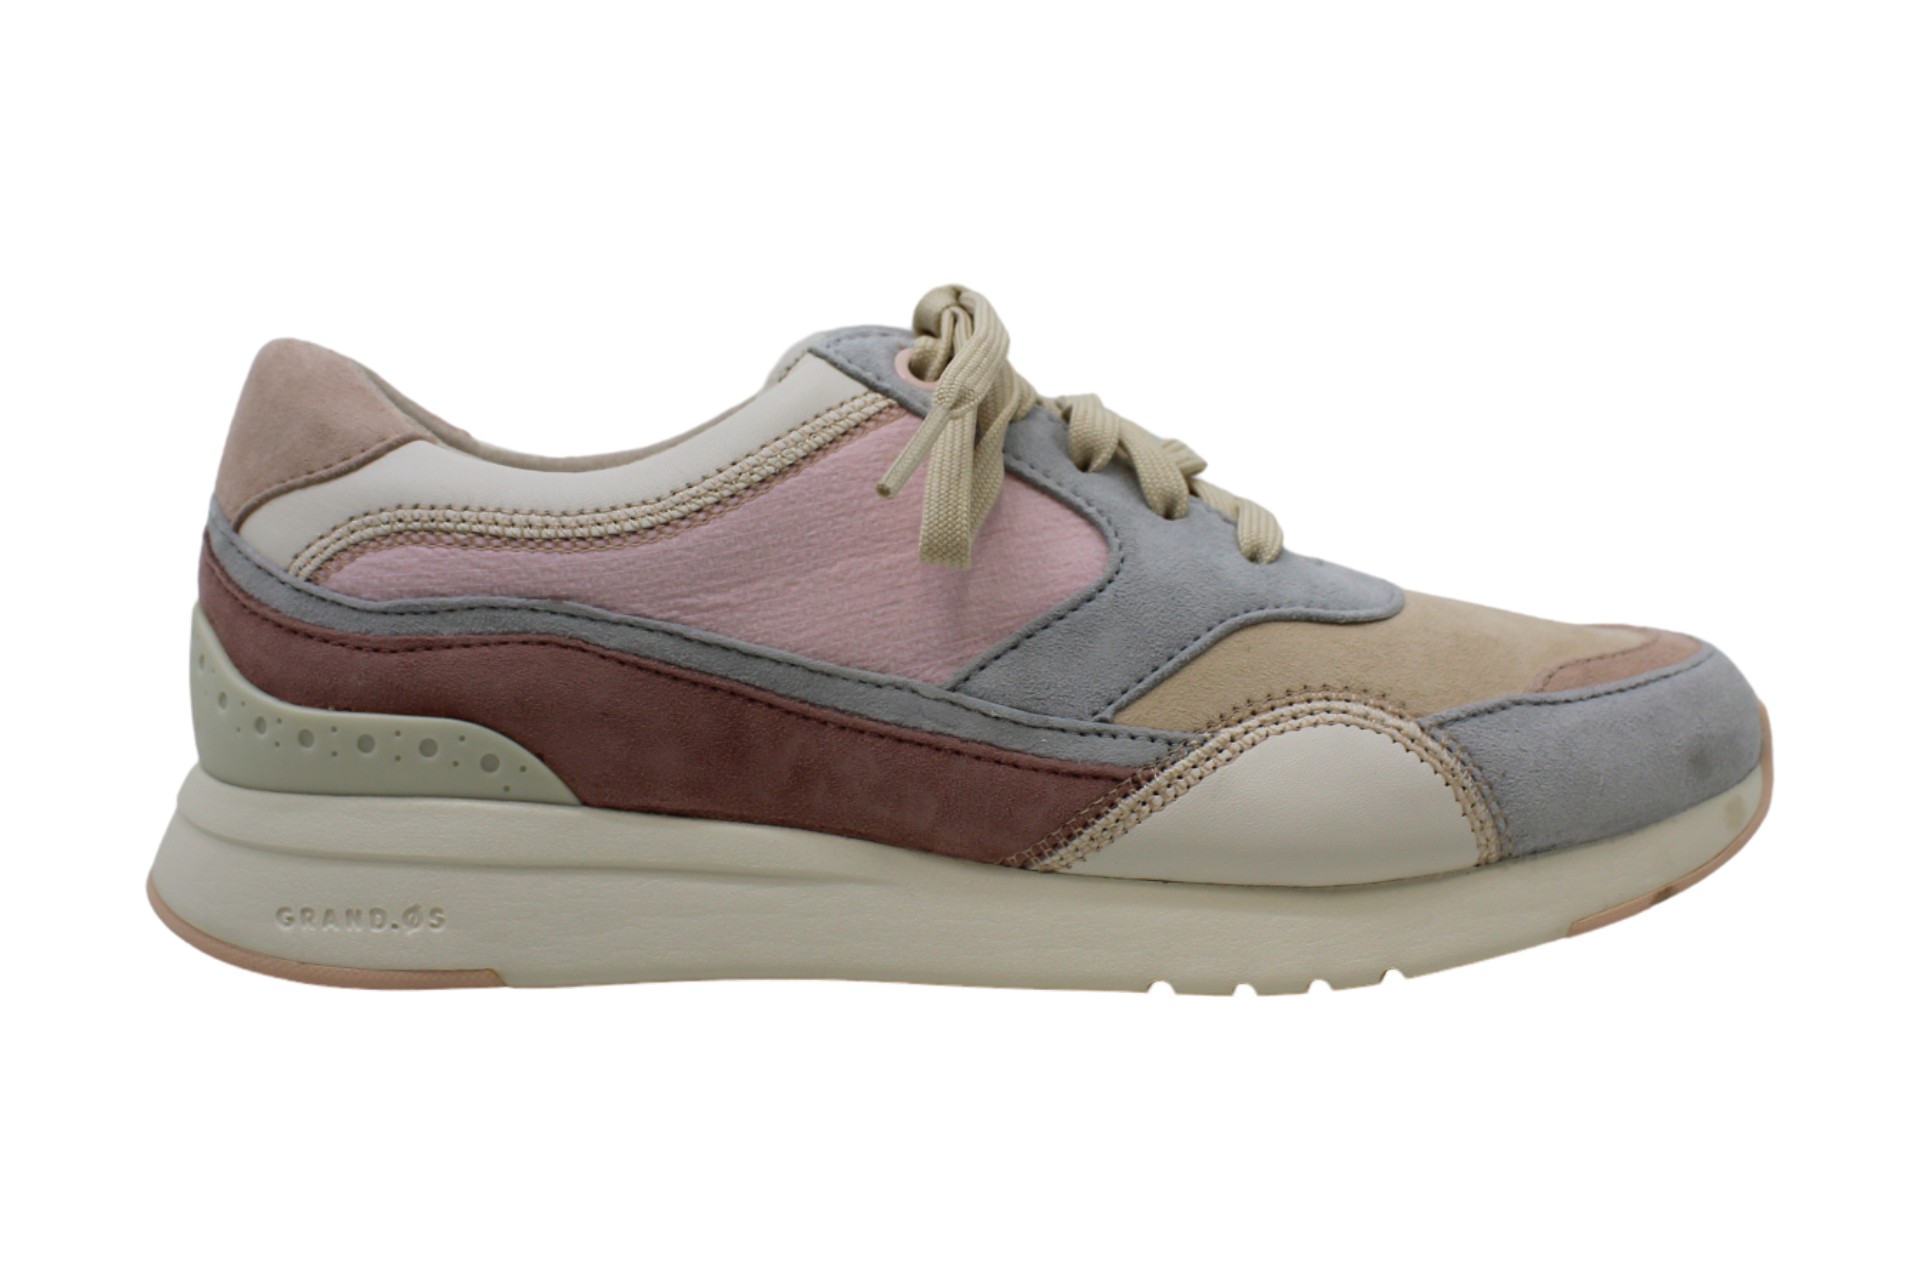 Cole Haan Women #39 s Shoes Grandpro Downtown Runner Suede Low Top Pink